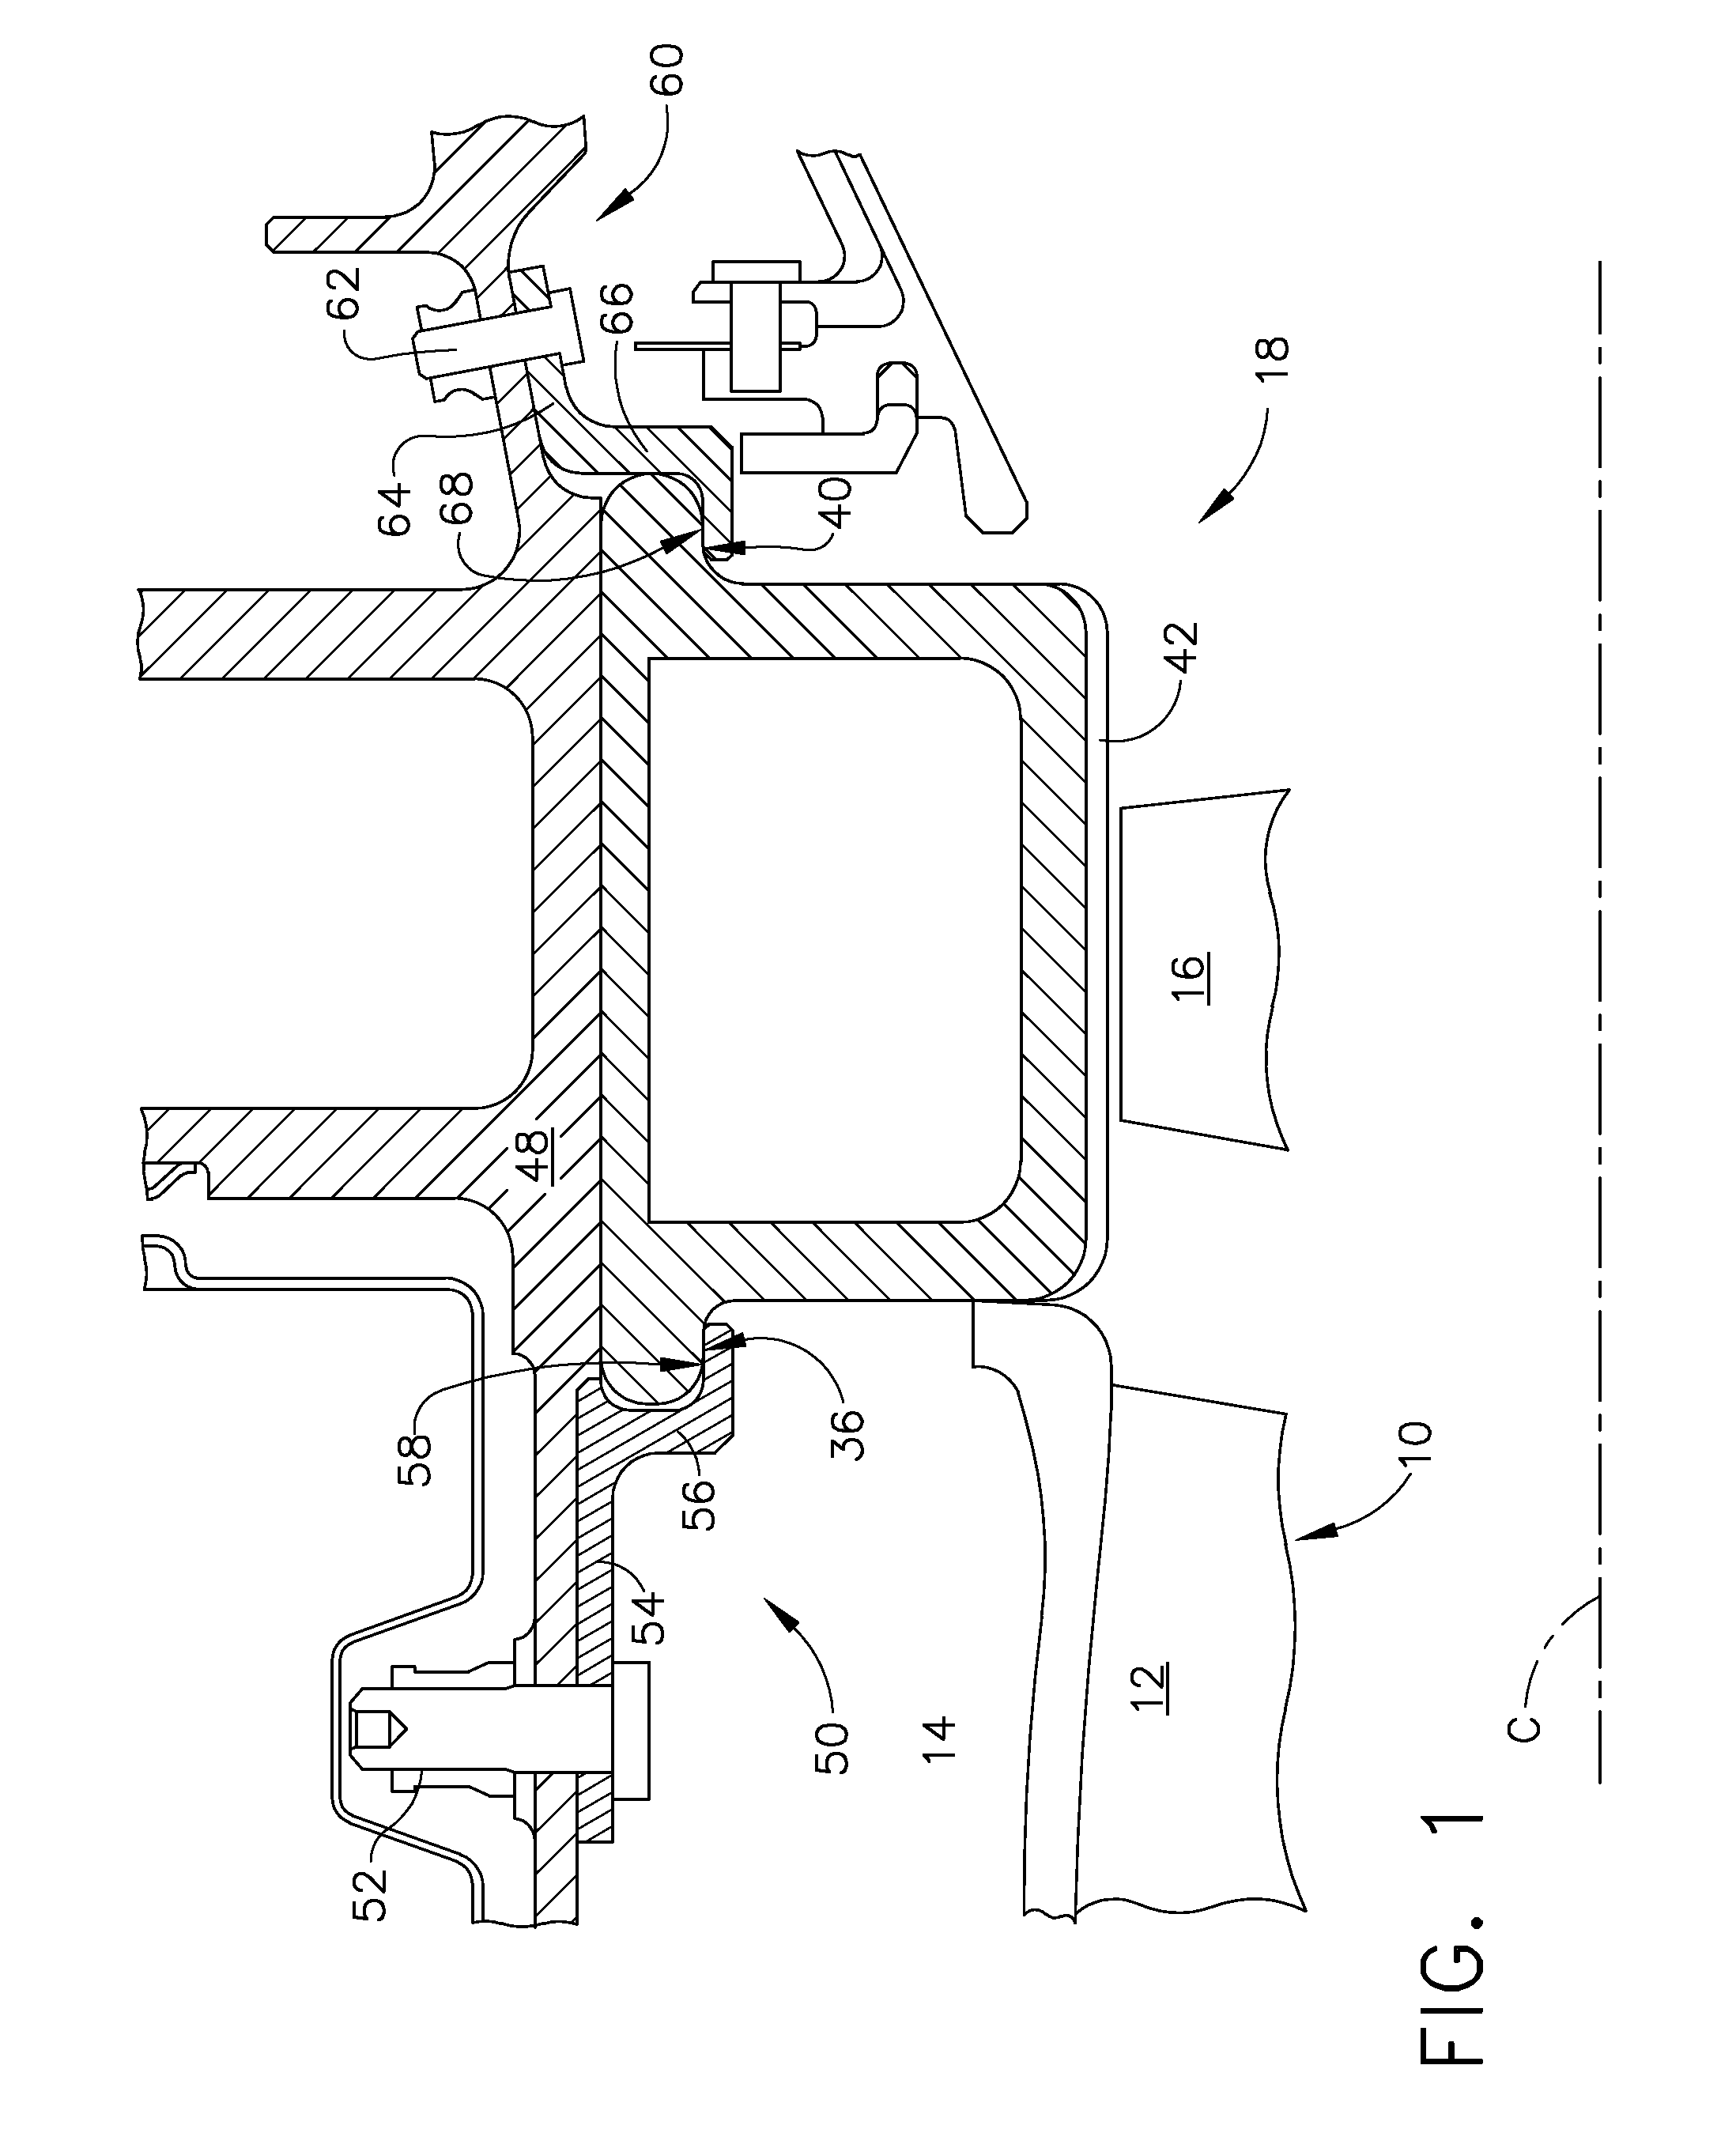 Chordal mounting arrangement for low-ductility turbine shroud